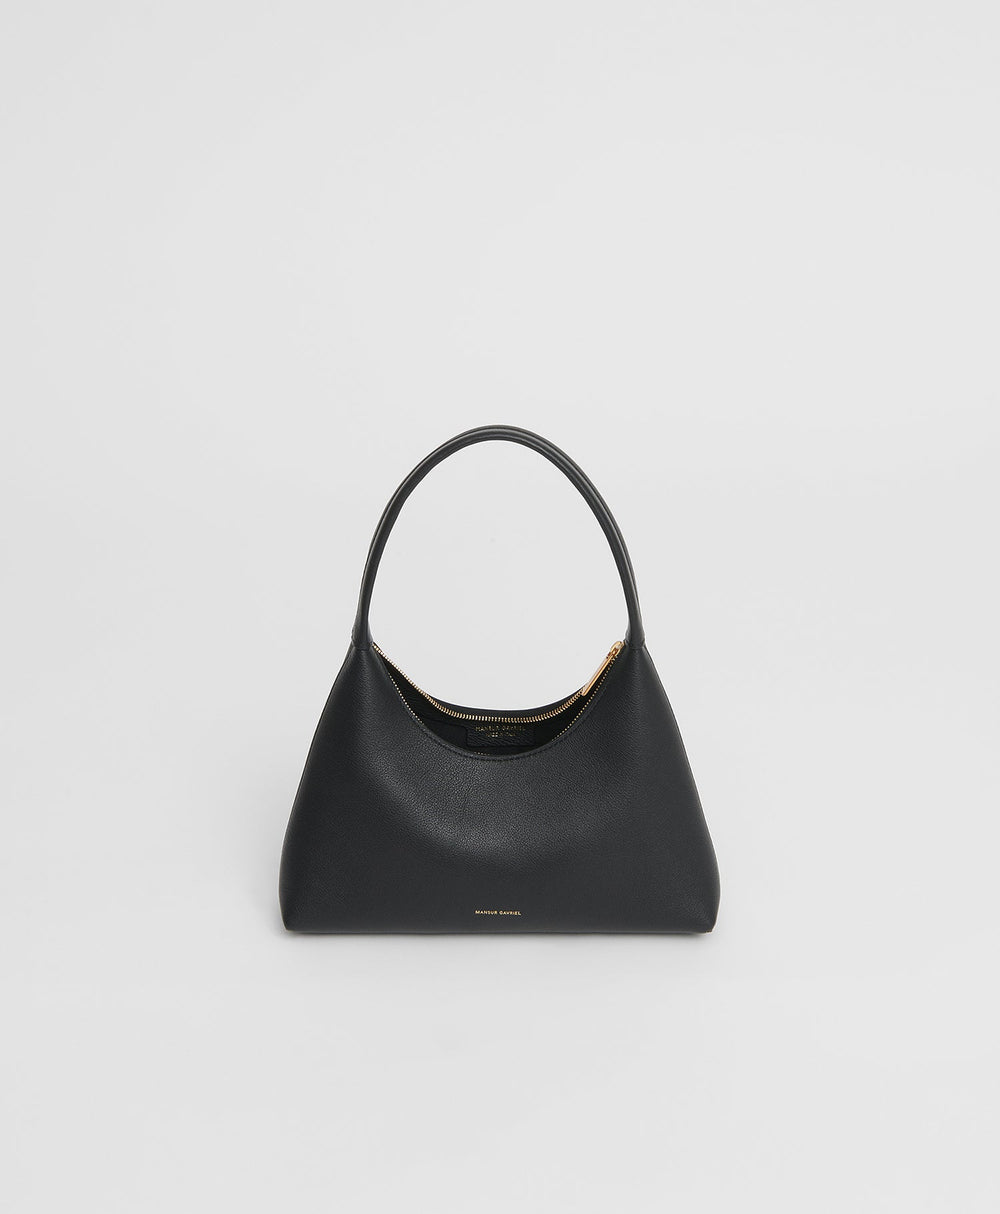 Wide Silver Des Sac De Luxe Designer Handbags Leather Bag - China